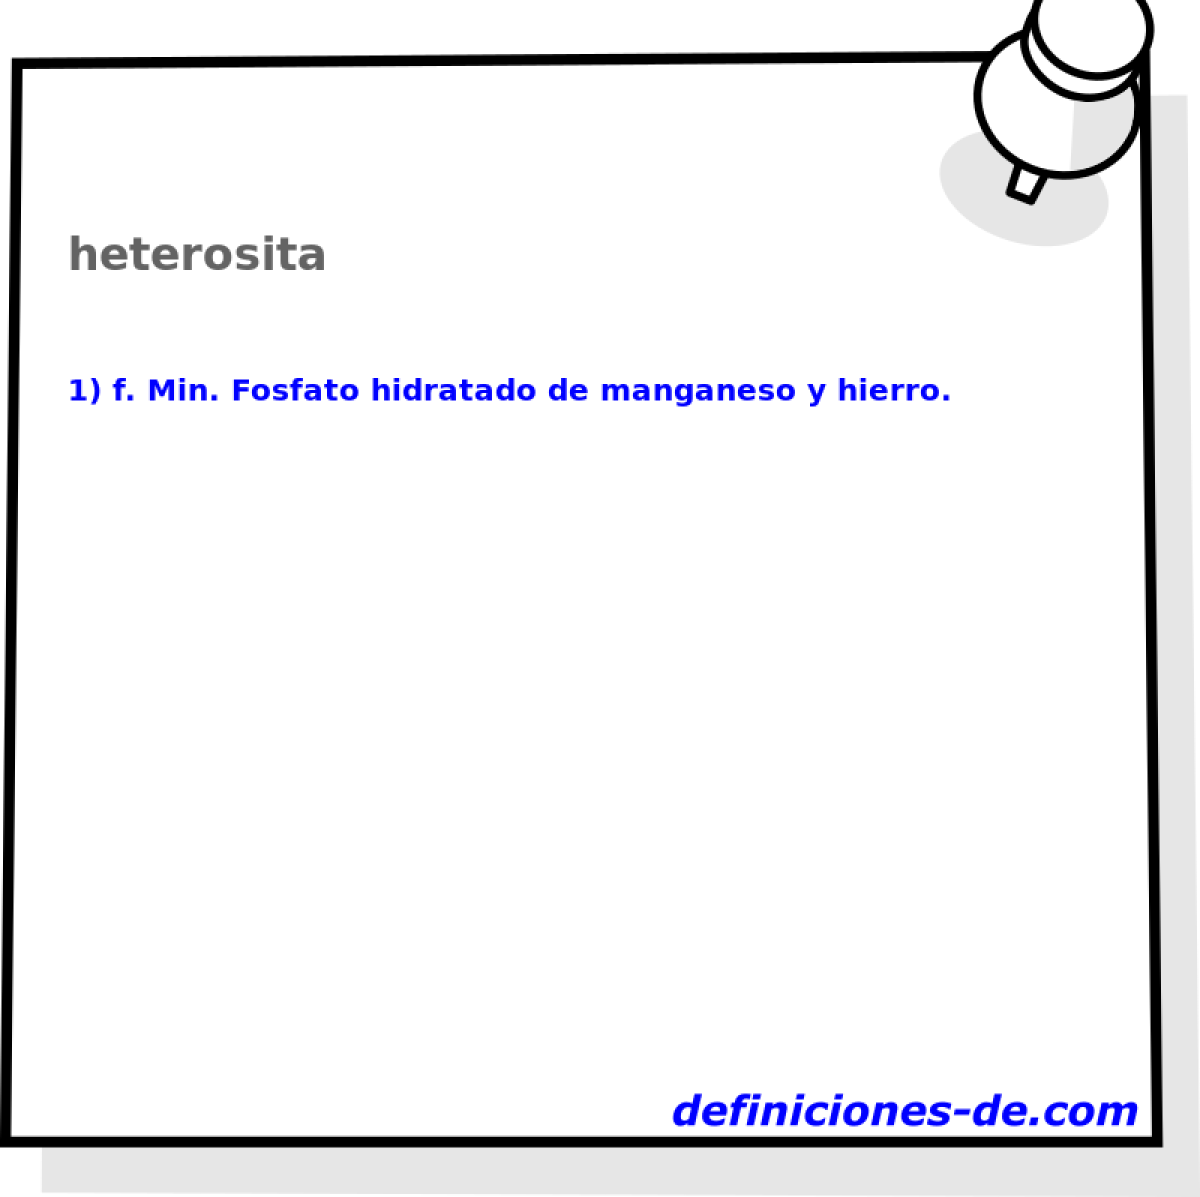 heterosita 